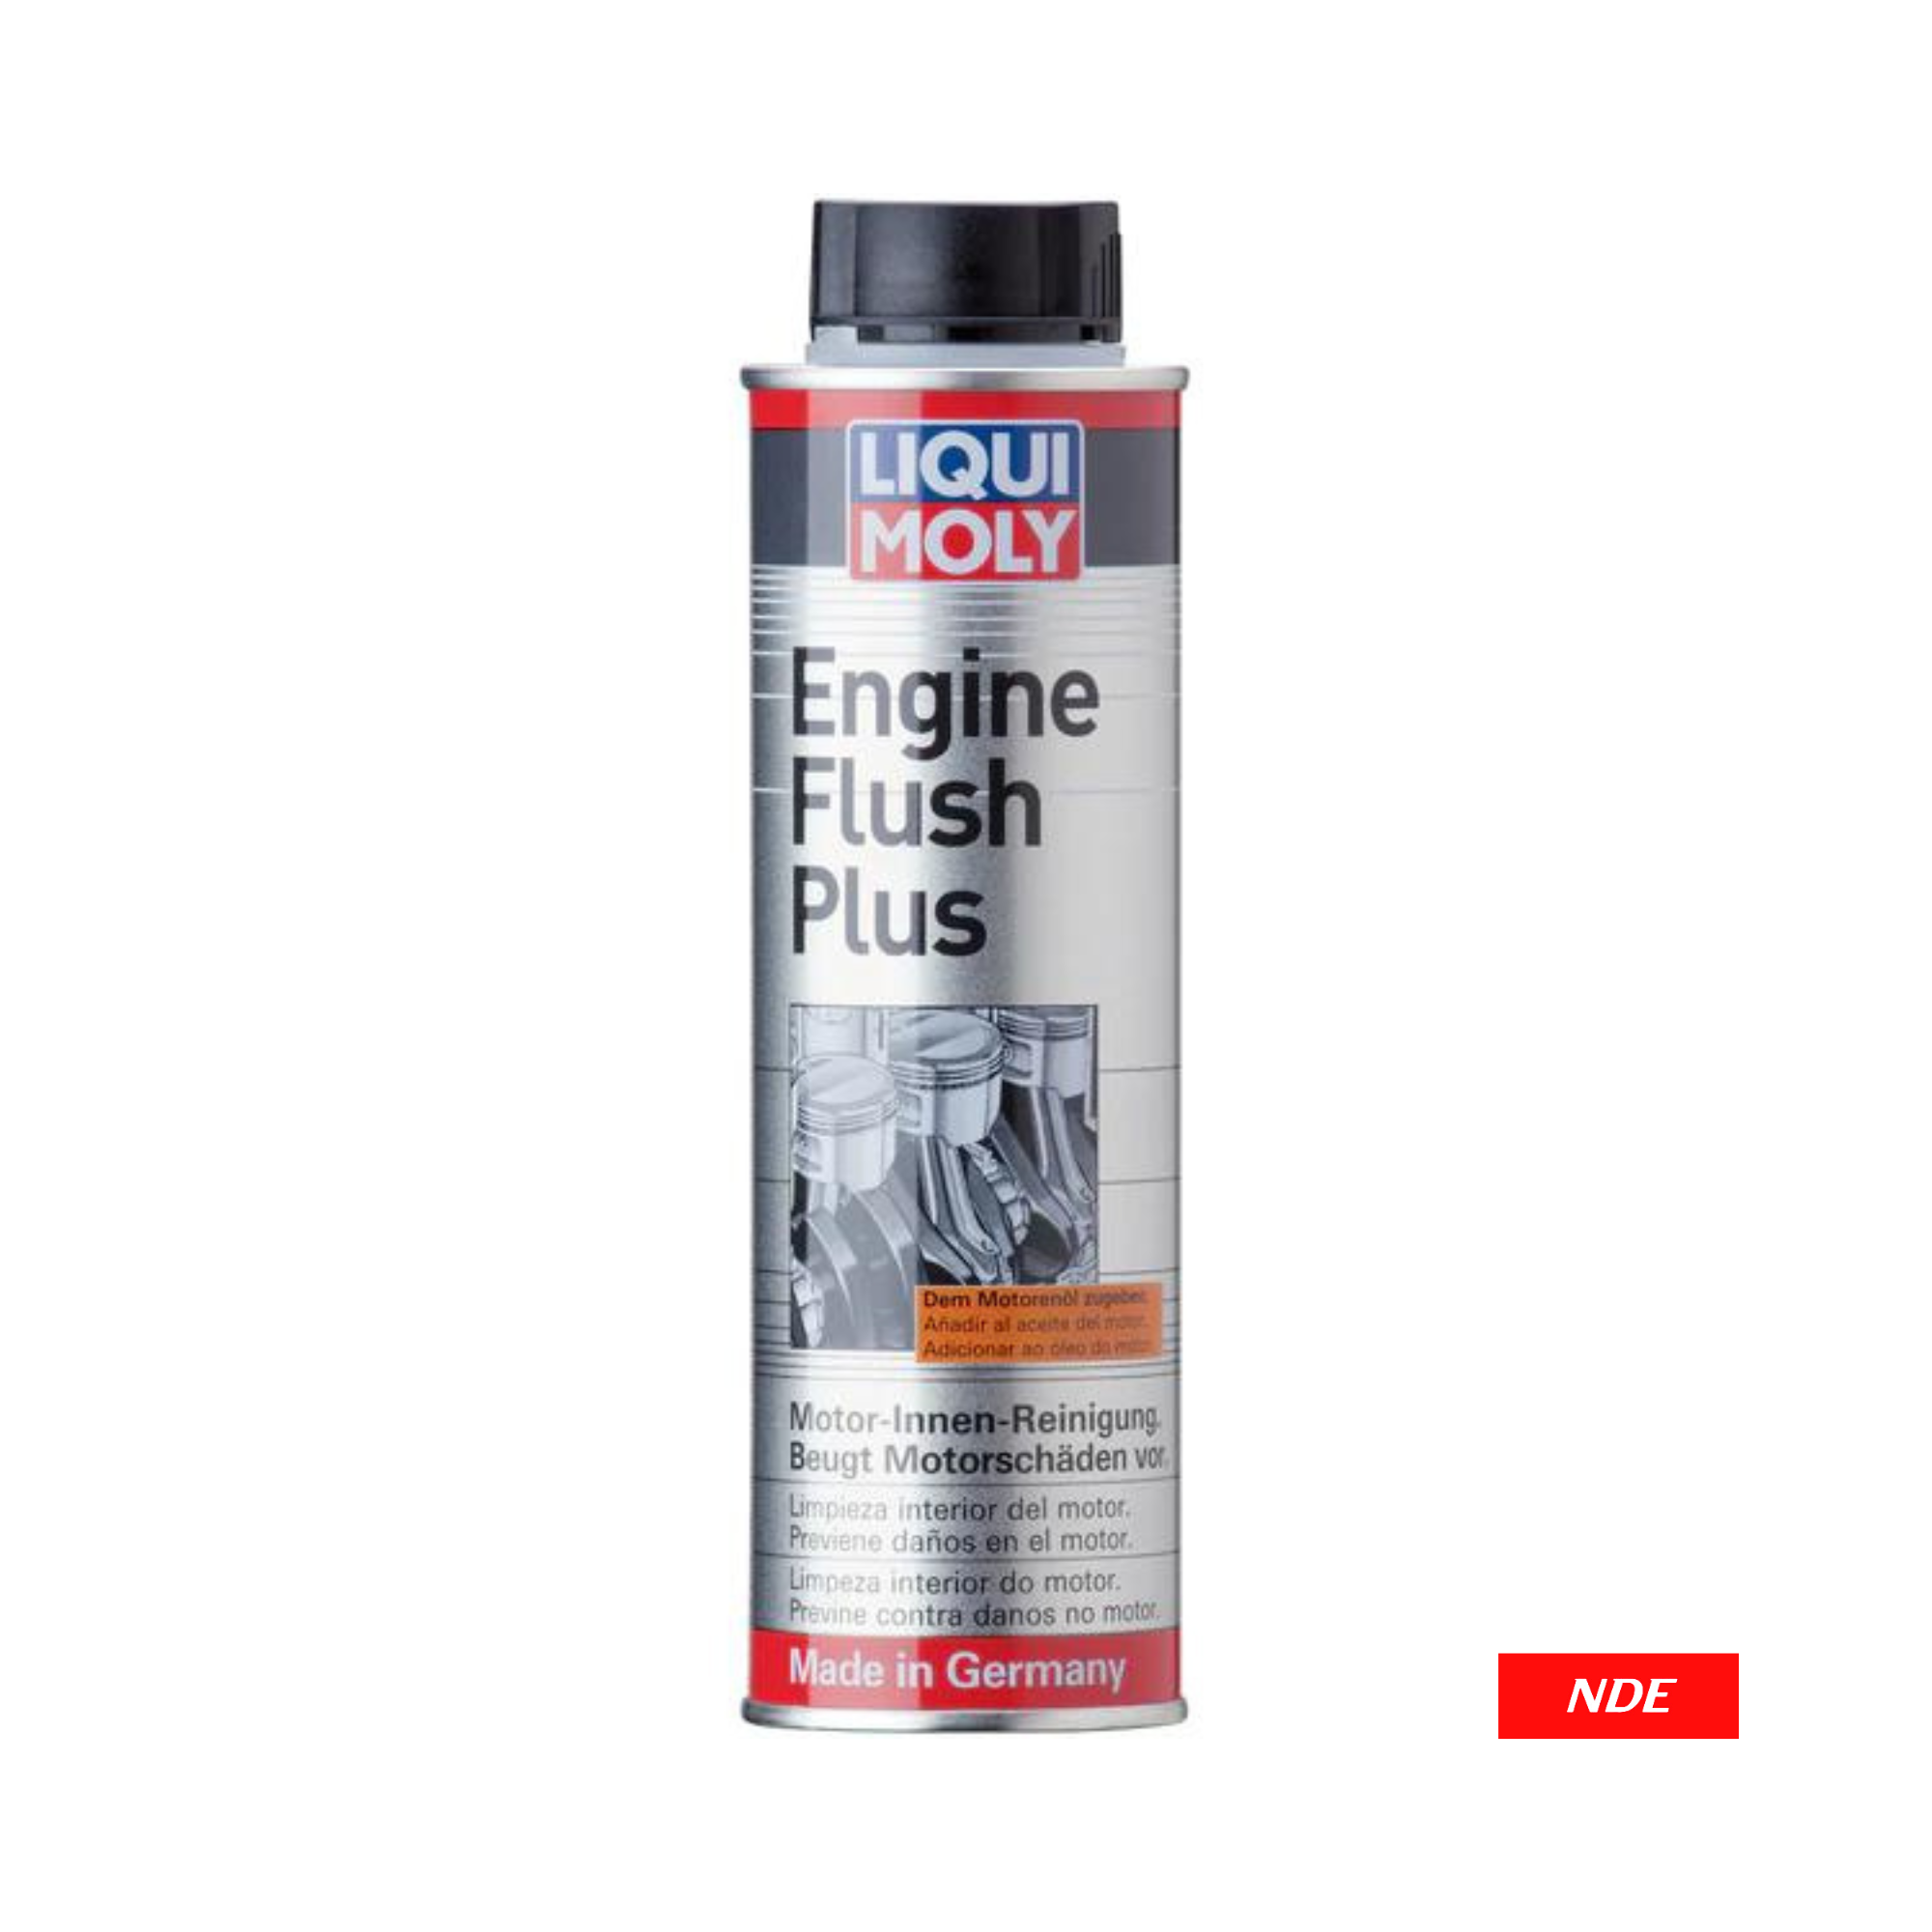 ENGINE FLUSH PLUS - LIQUI MOLY